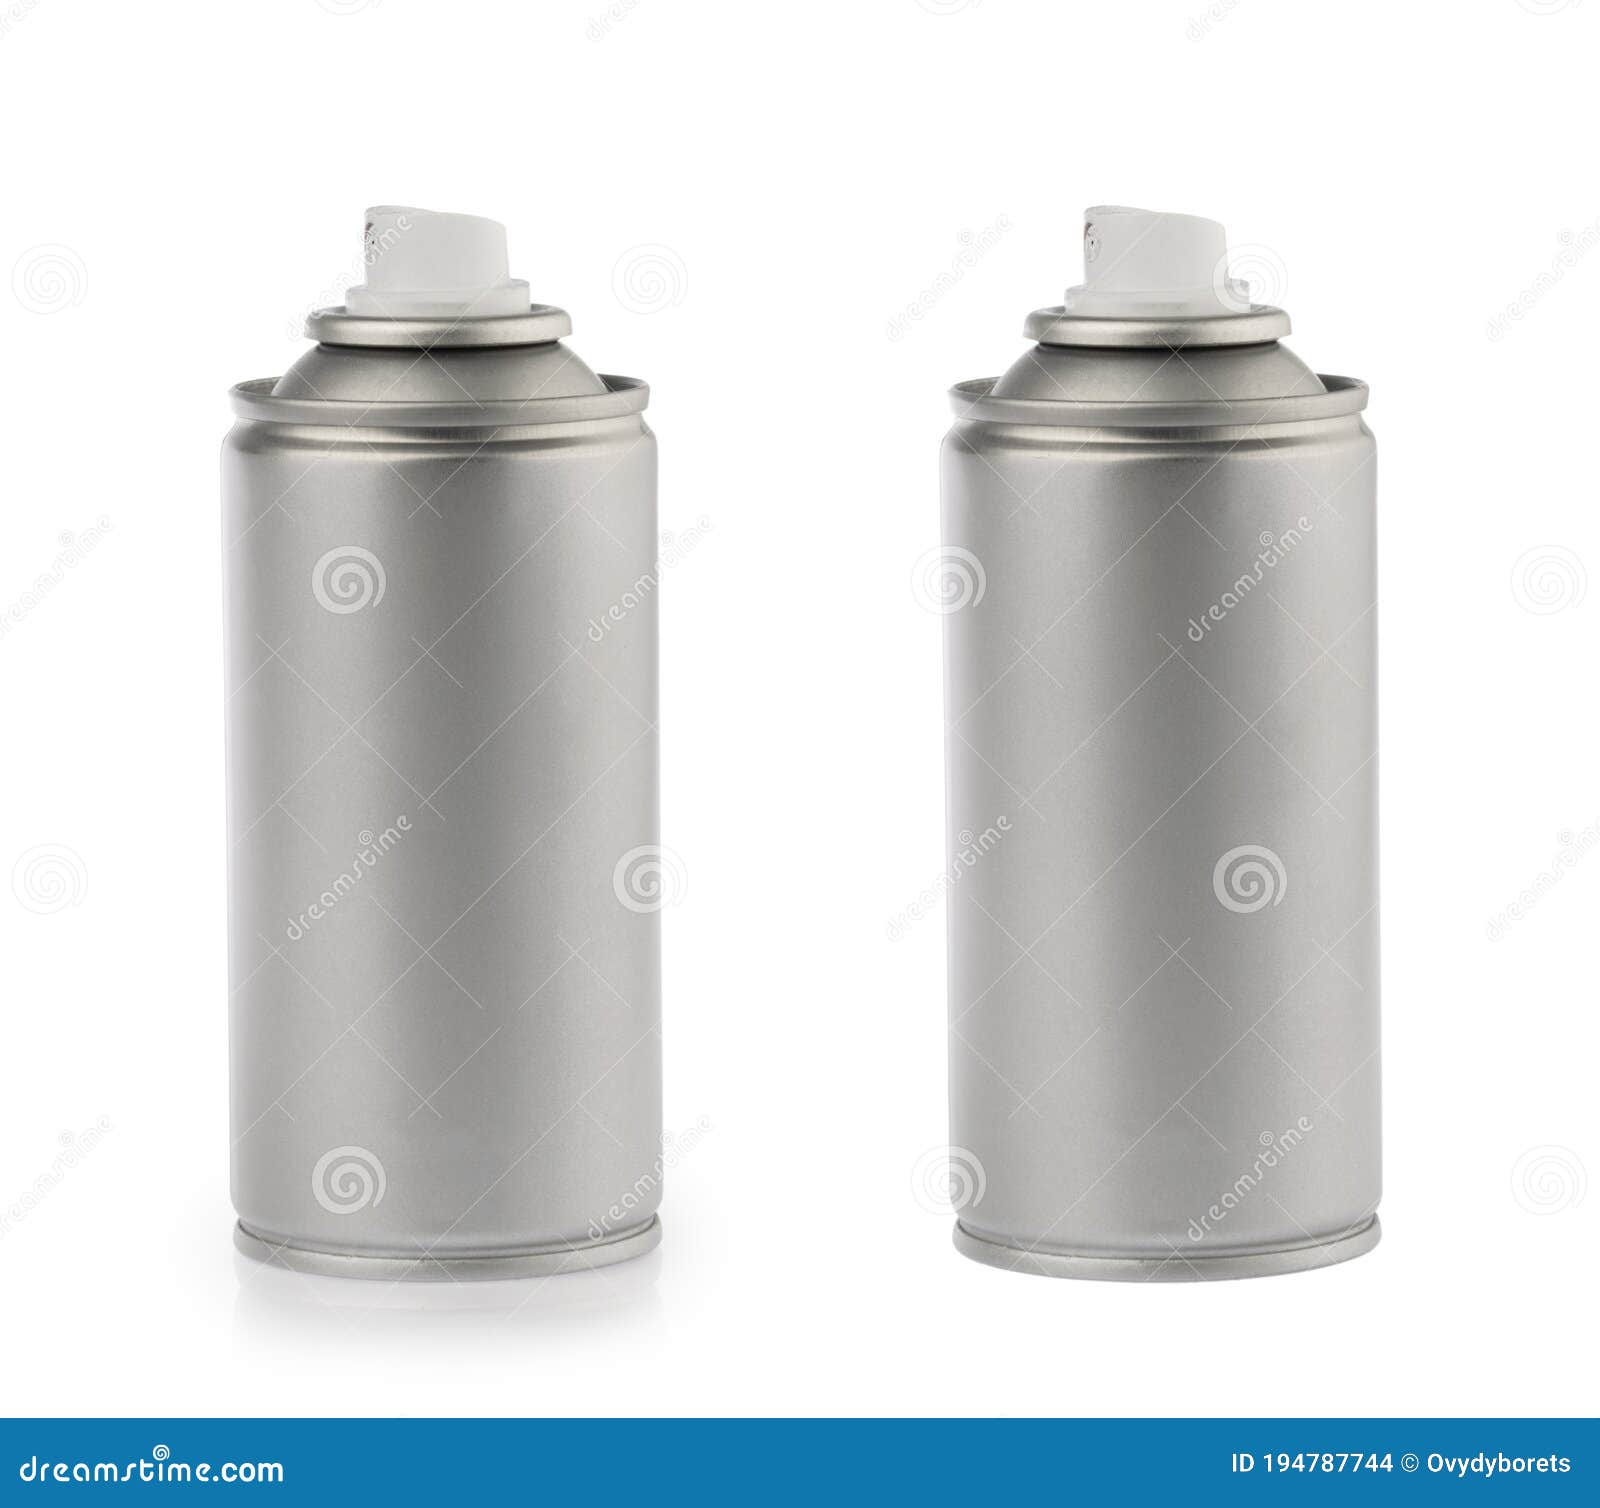 aerosol spray can  on white background